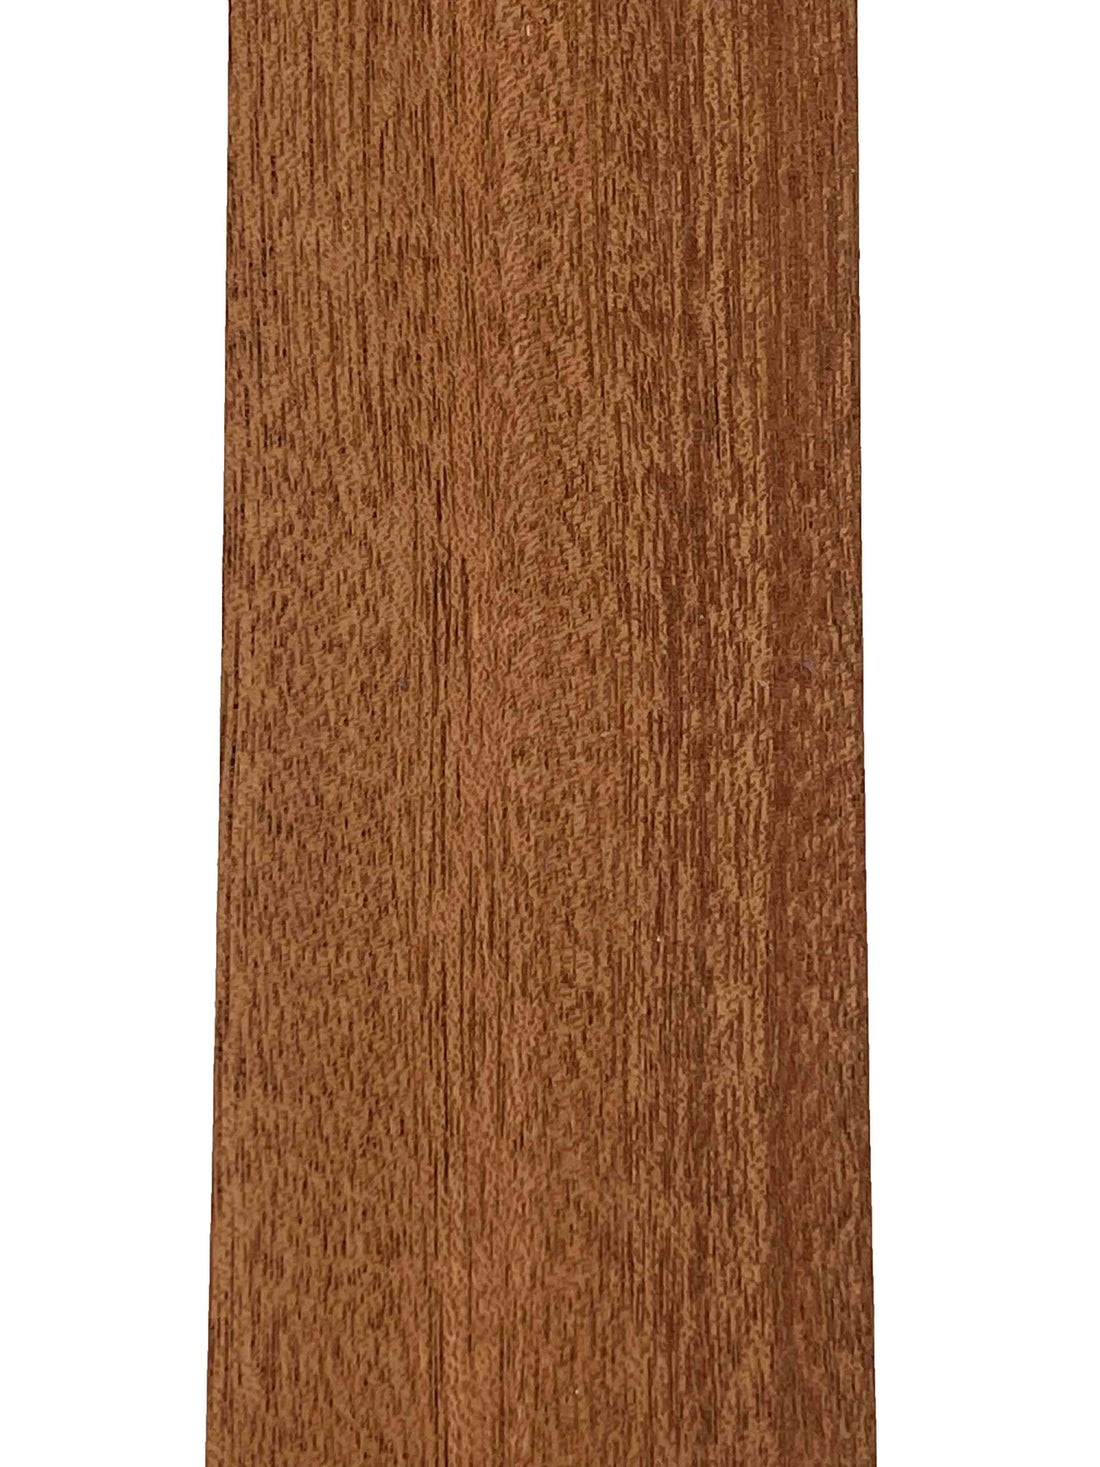 Morado/ Santos Rosewood Thin Stock Lumber Boards Wood Crafts - Exotic Wood  Zone – Exotic Wood Zone